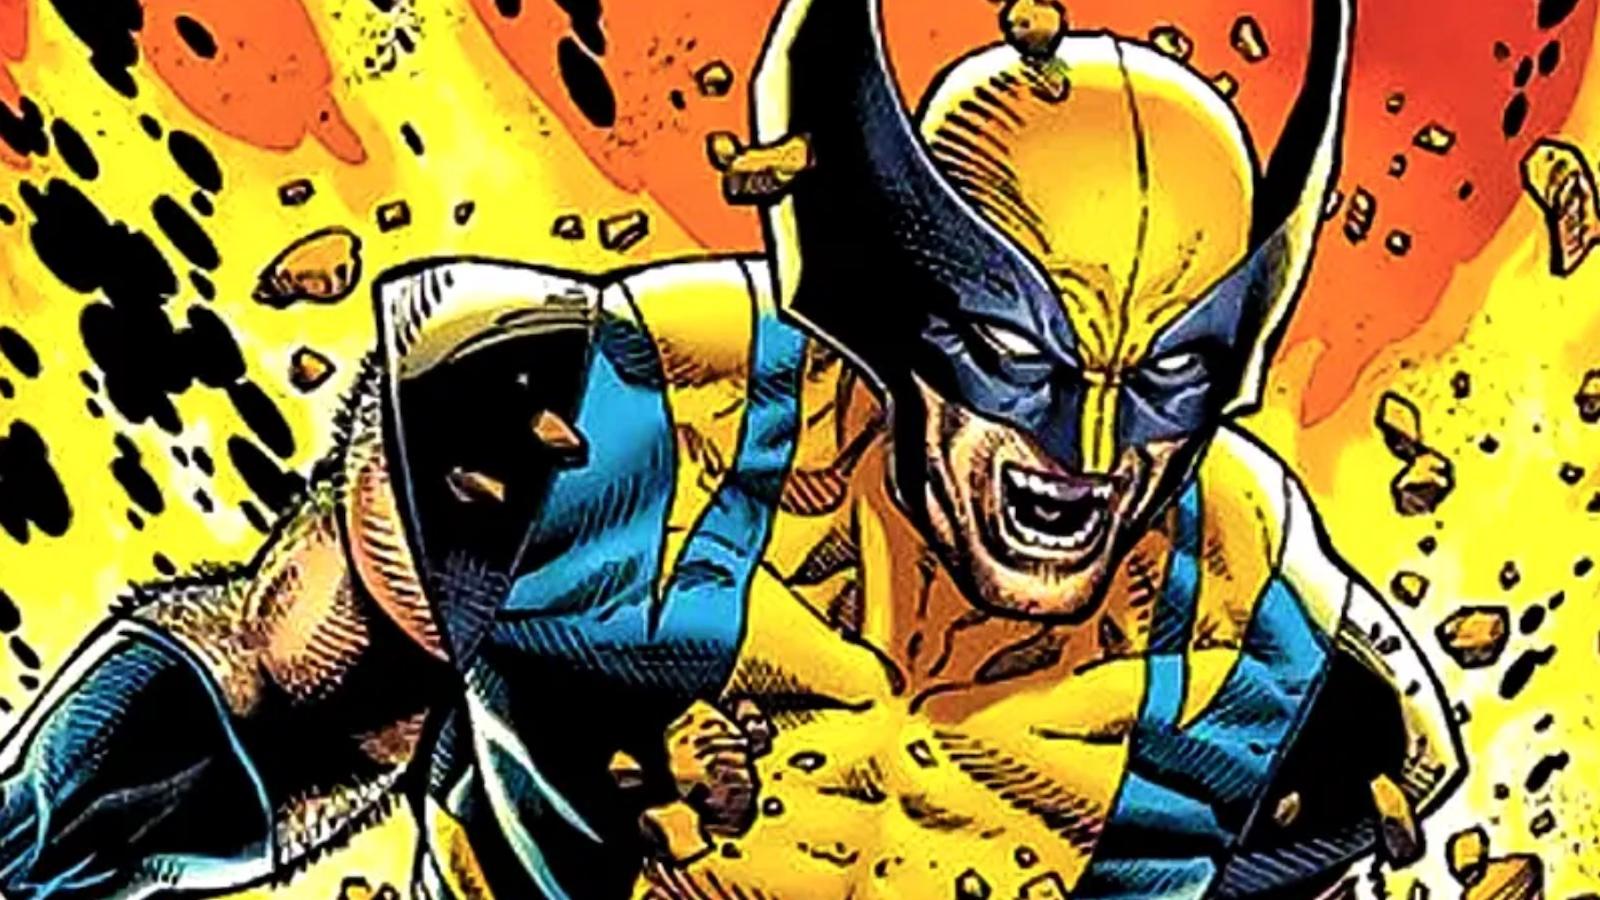 Wolverine in Marvel's X-Men comics